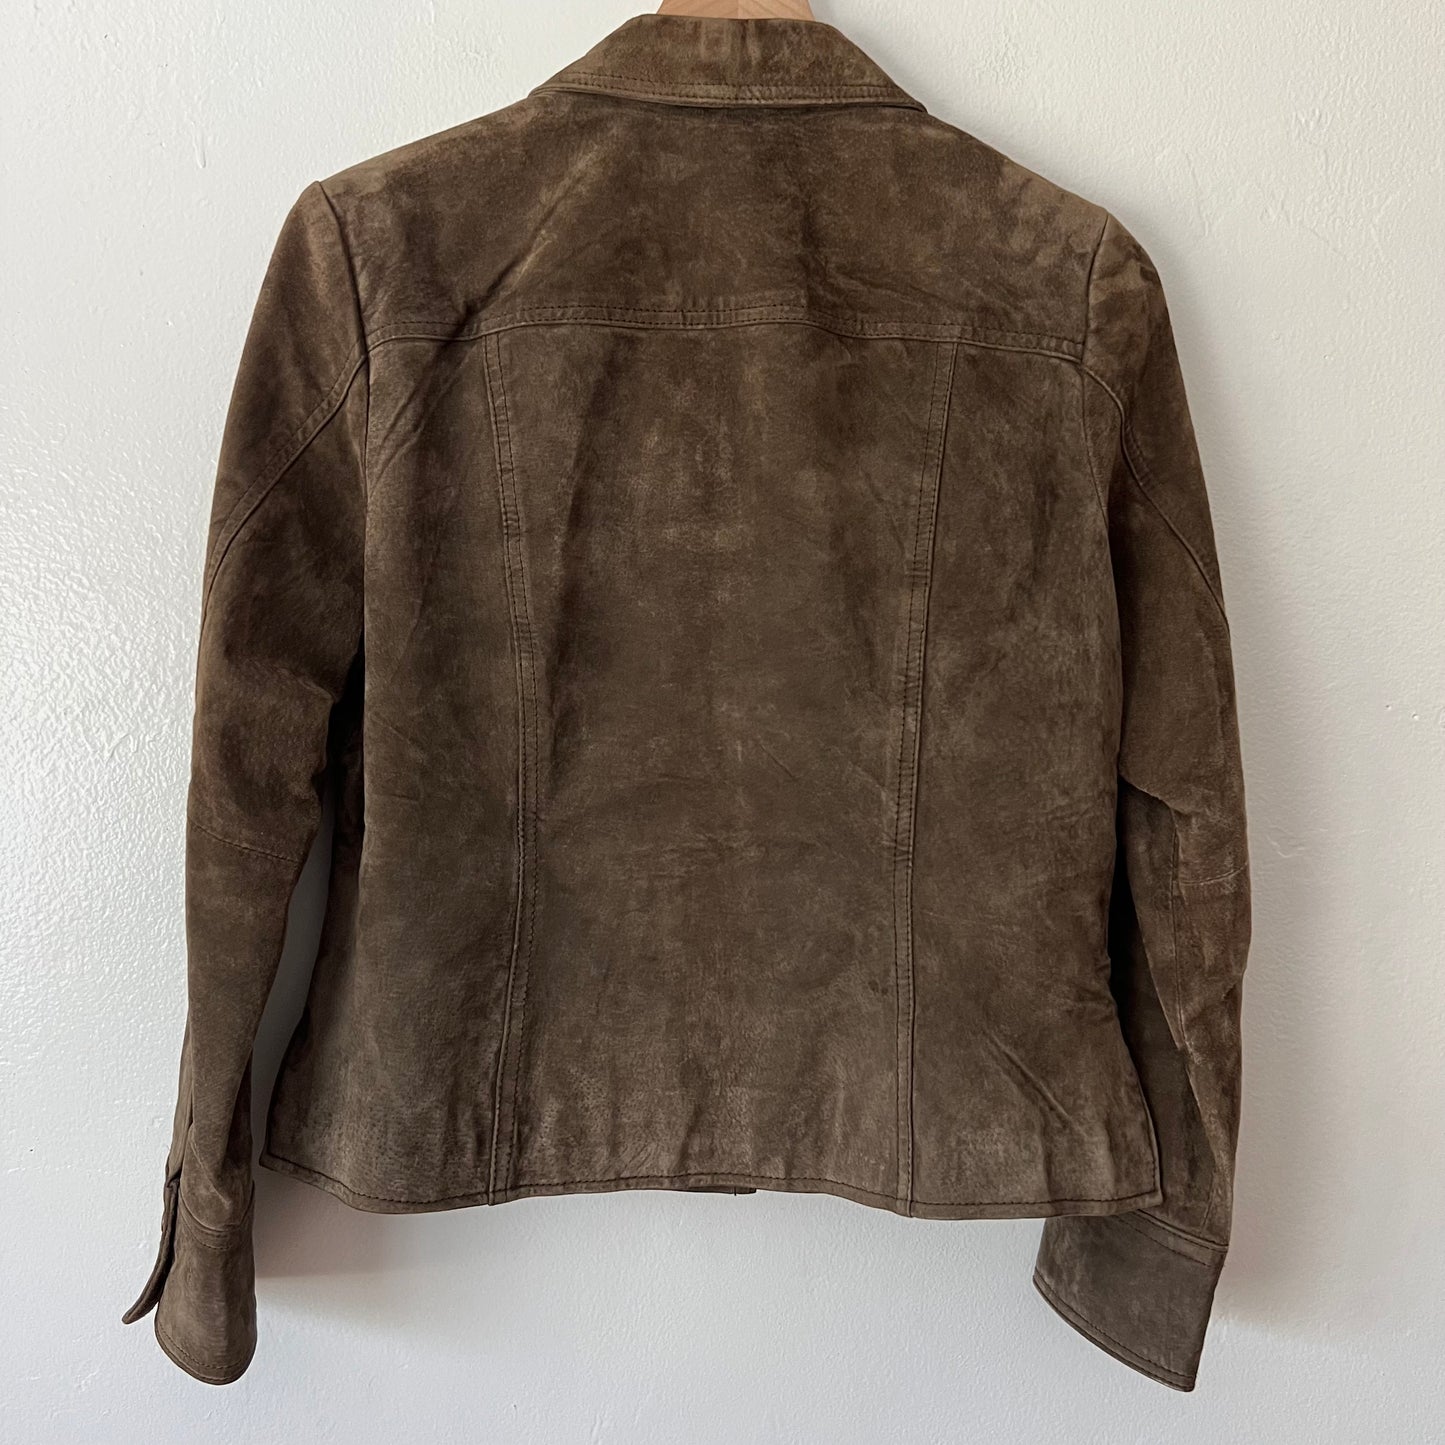 Coldwater Creek Vintage Leather Jacket